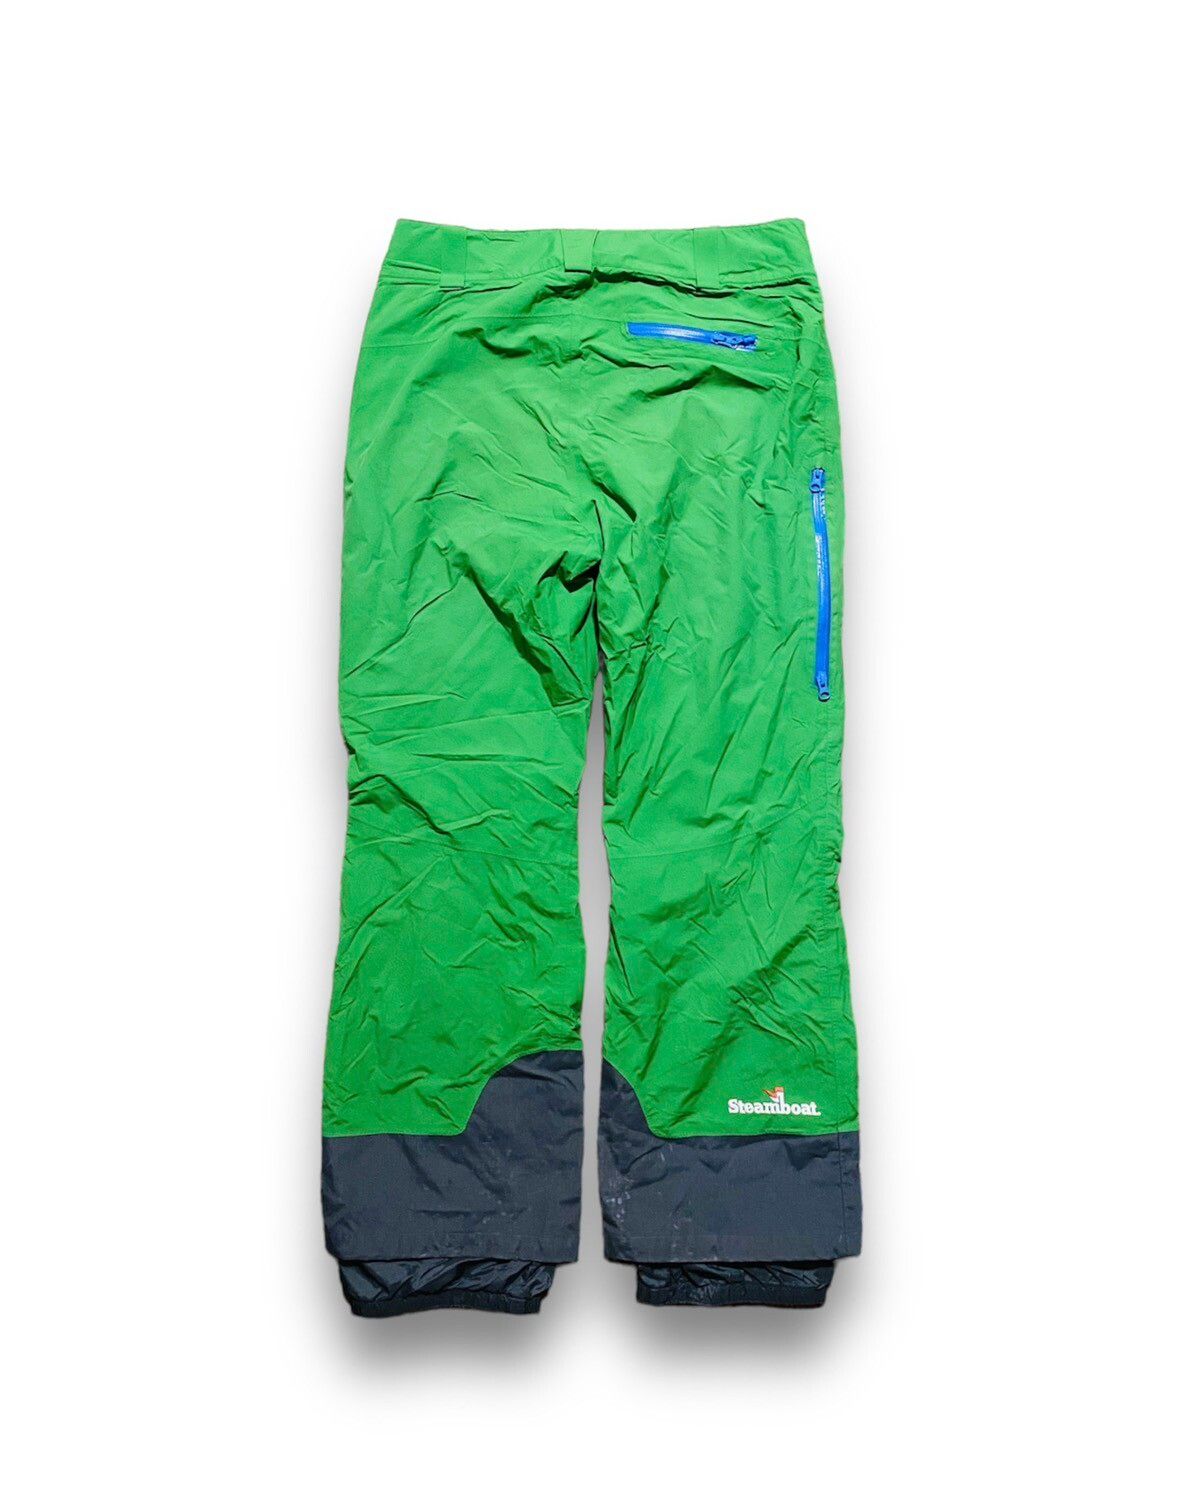 Marmot GTX Pants Trousers Skiing Hiking Outdoor Green L/XL - 5